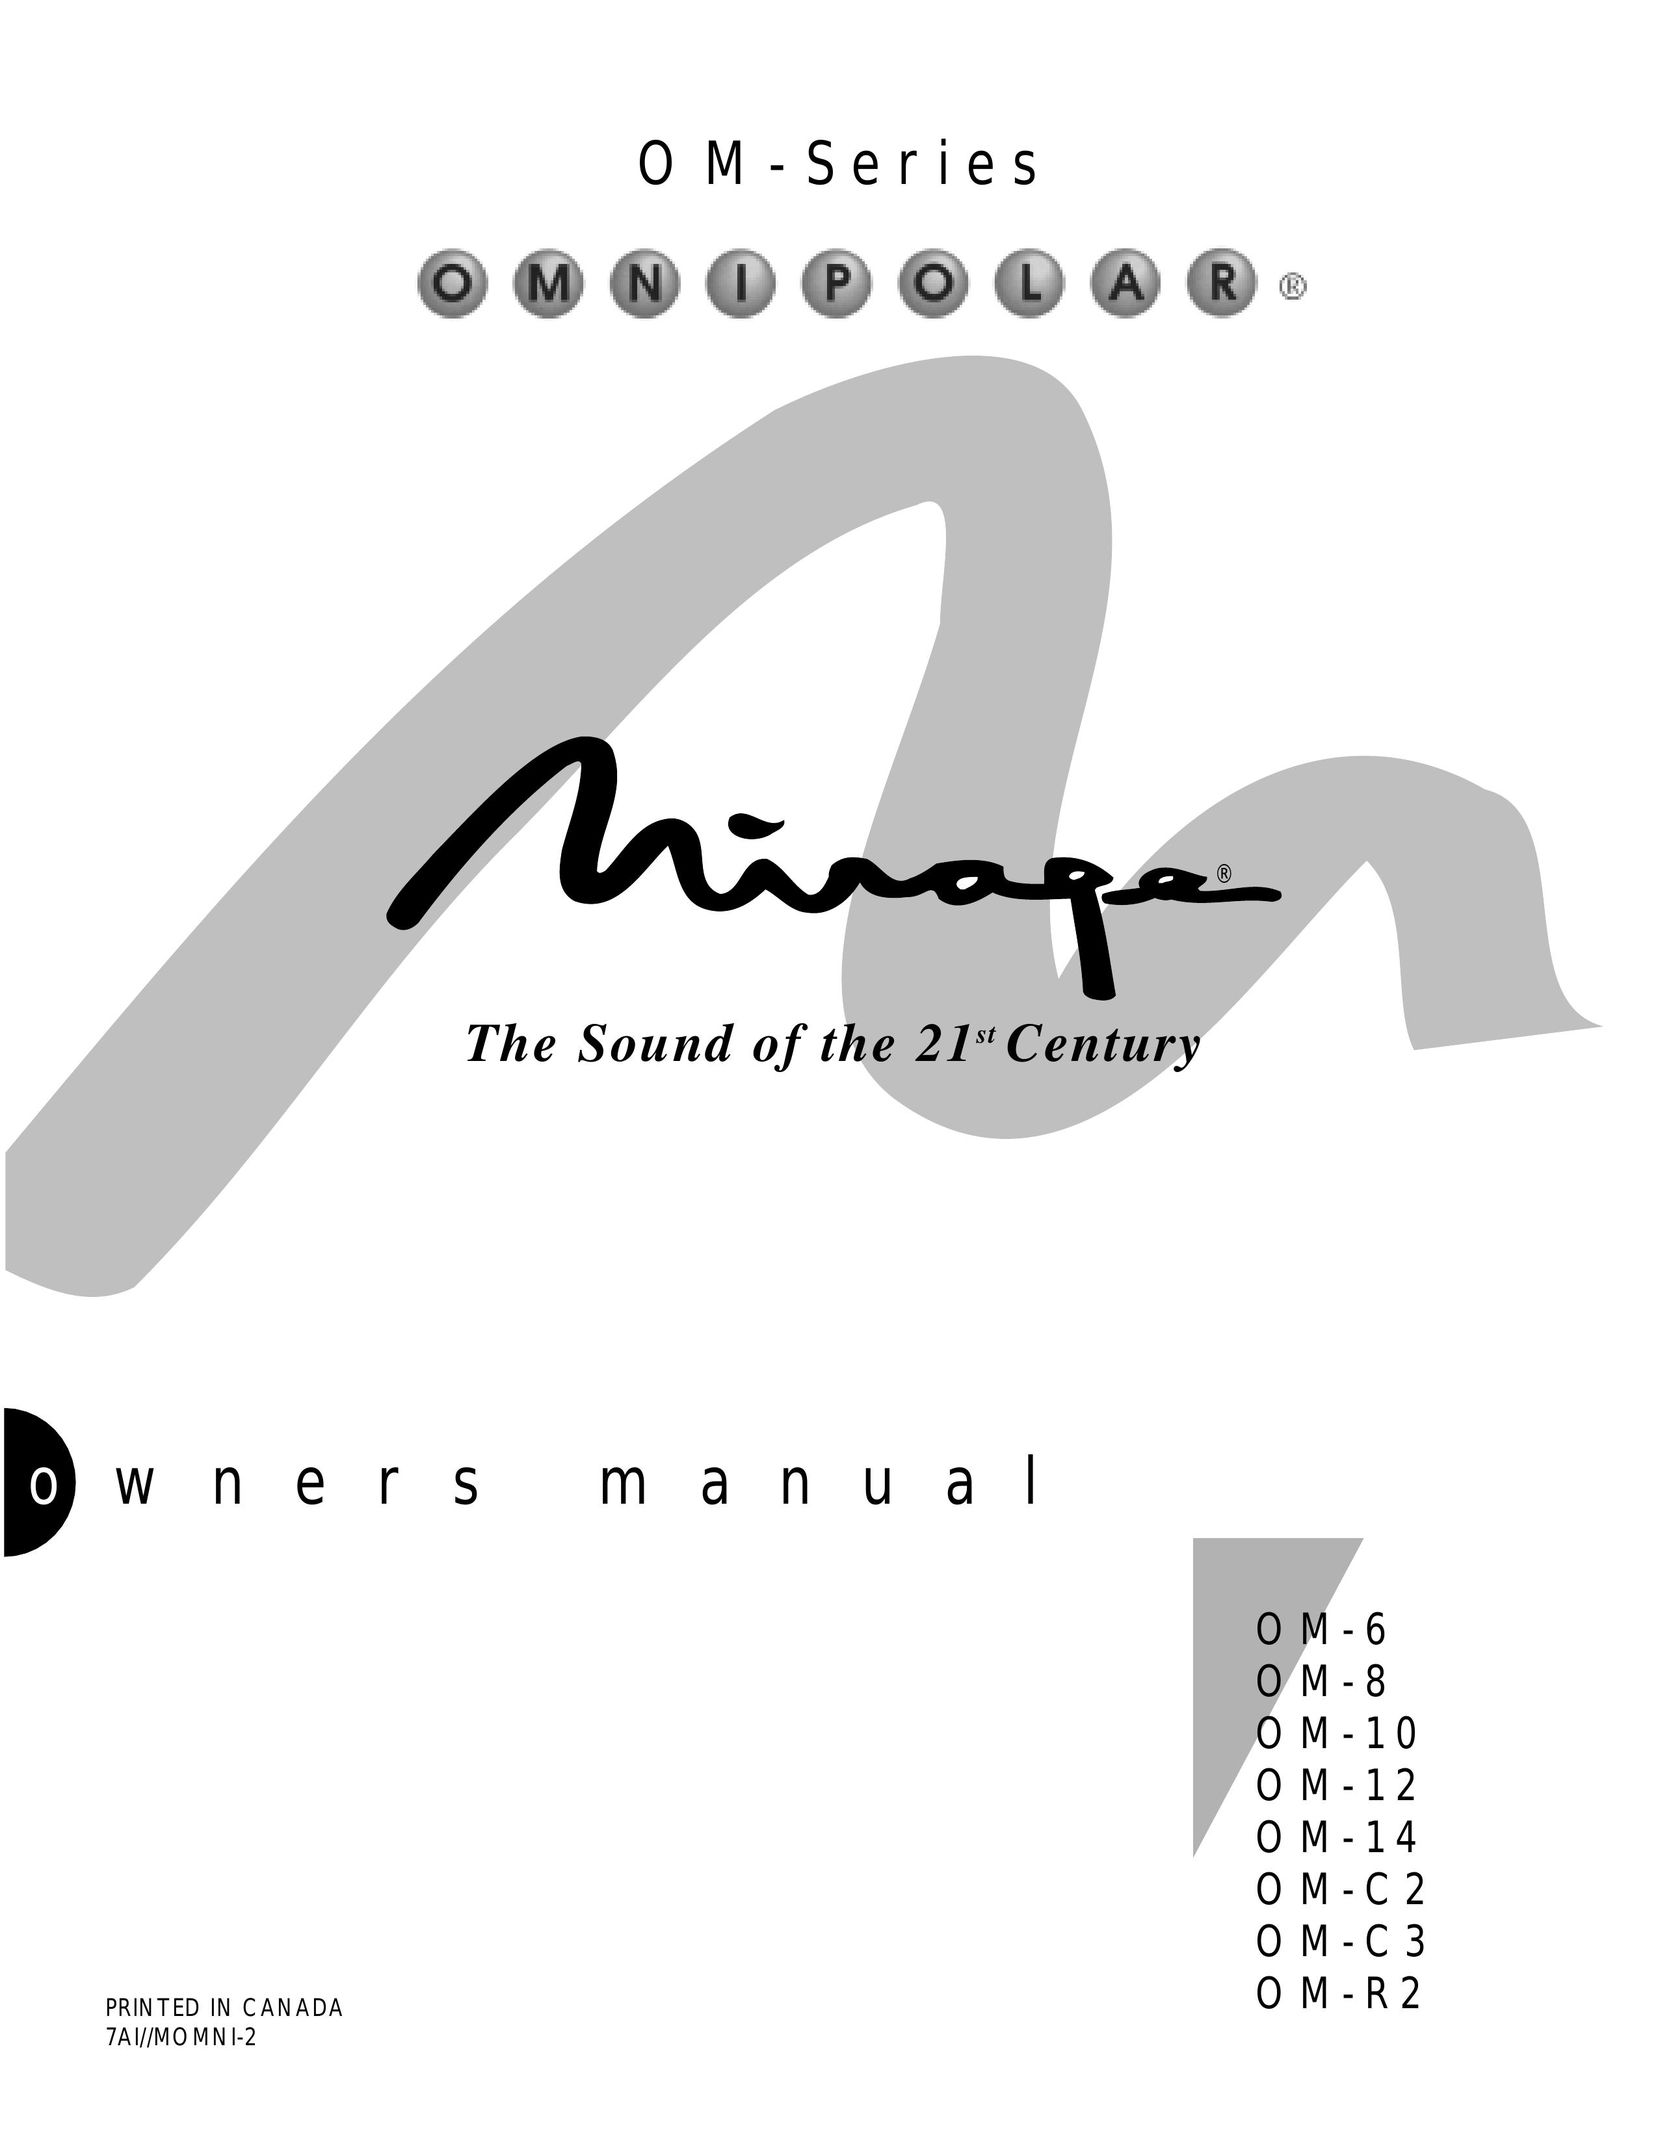 Mirage Loudspeakers O M - 1 2 Speaker User Manual